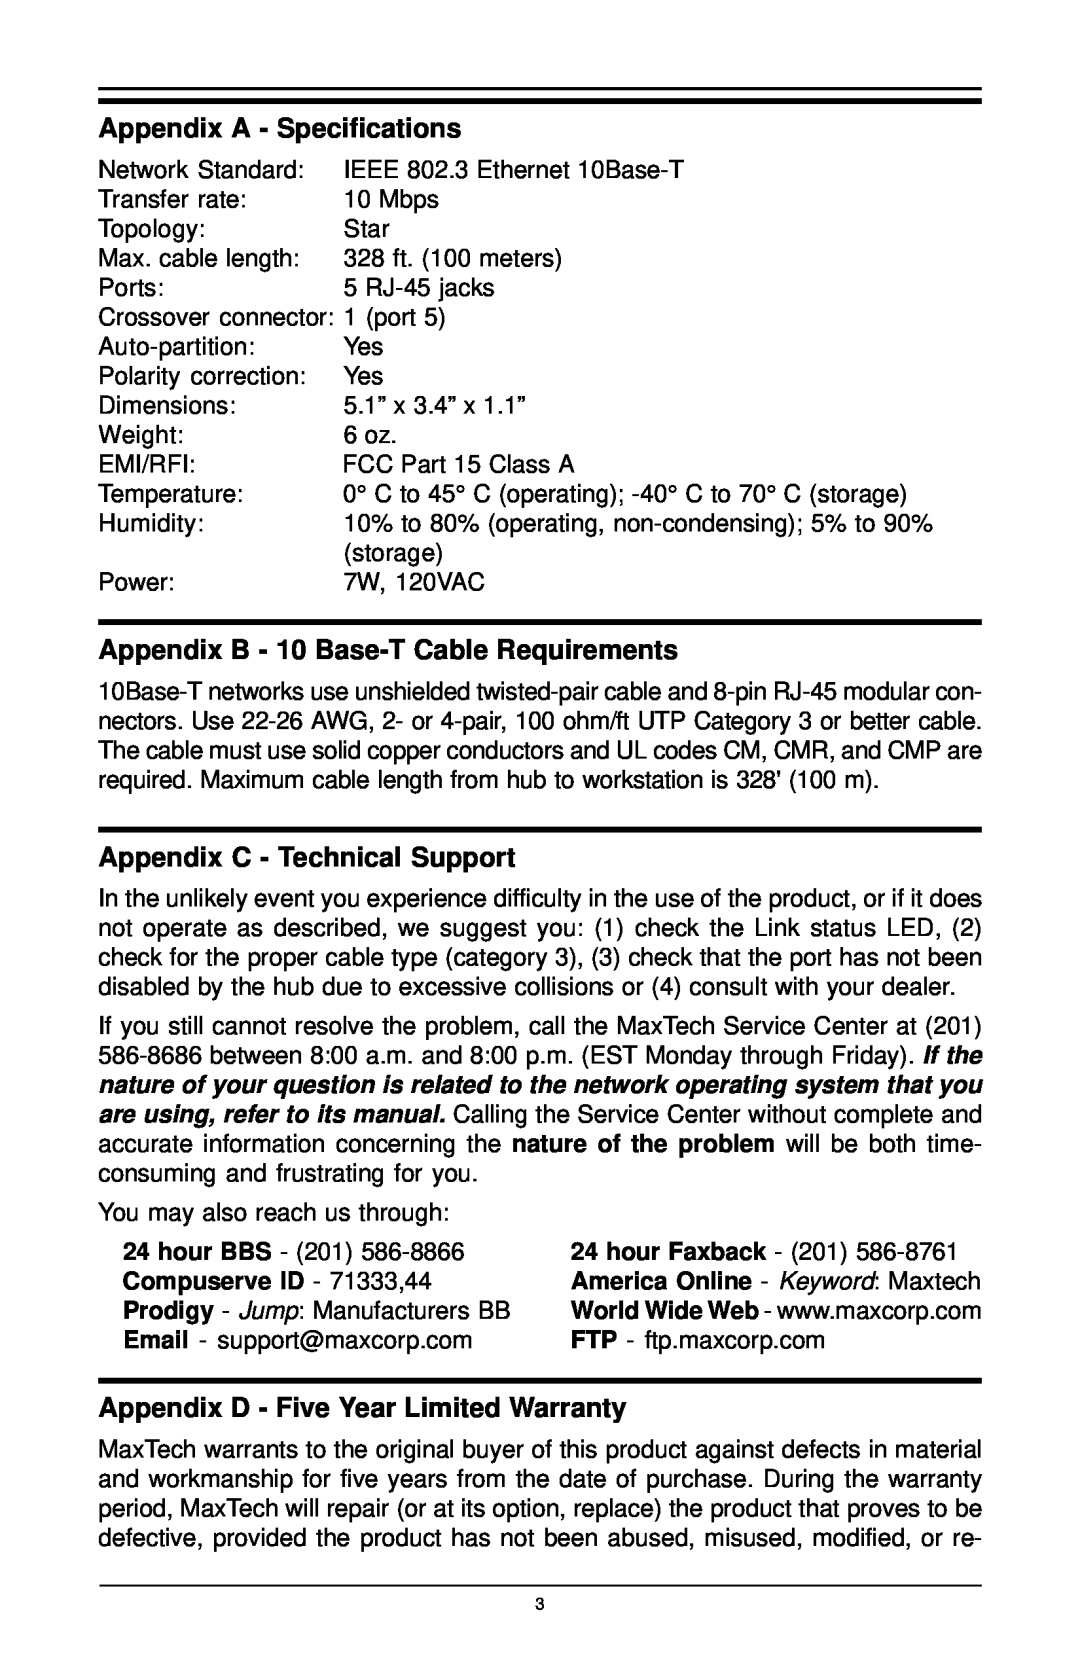 MaxTech HX-5 manual Appendix A - Specifications, Appendix B - 10 Base-T Cable Requirements, Appendix C - Technical Support 